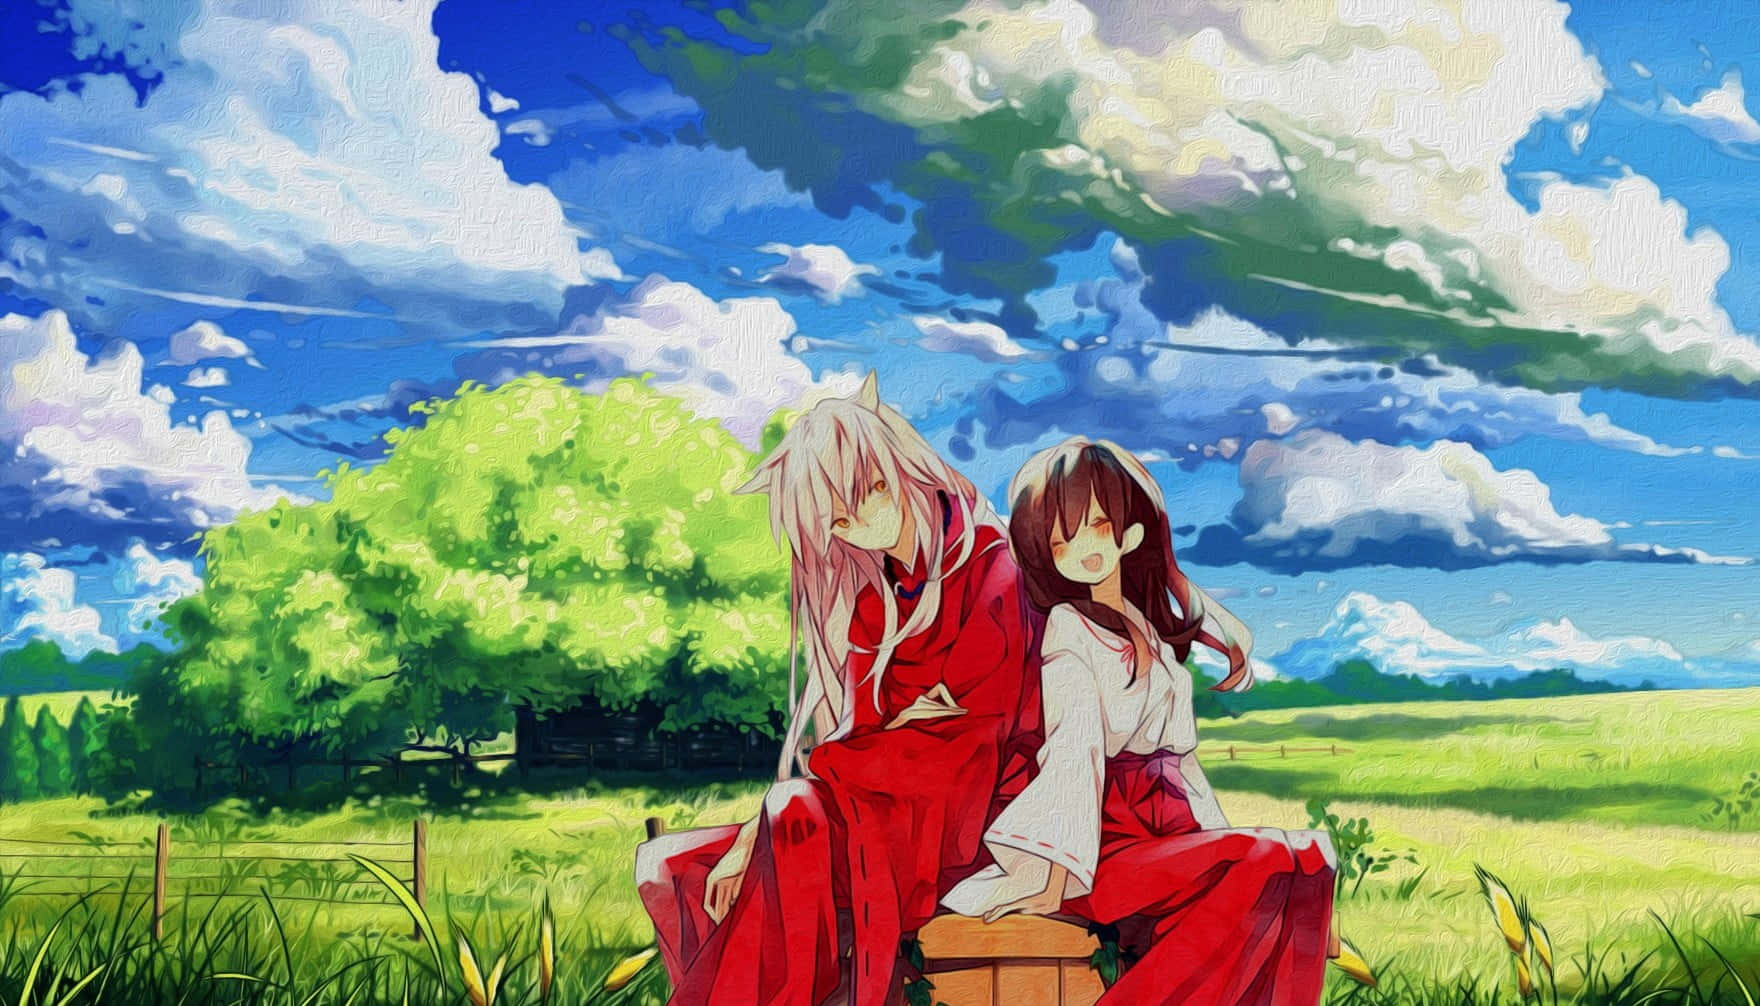 Inuyasha and Kikyo: A love story transcending time Wallpaper